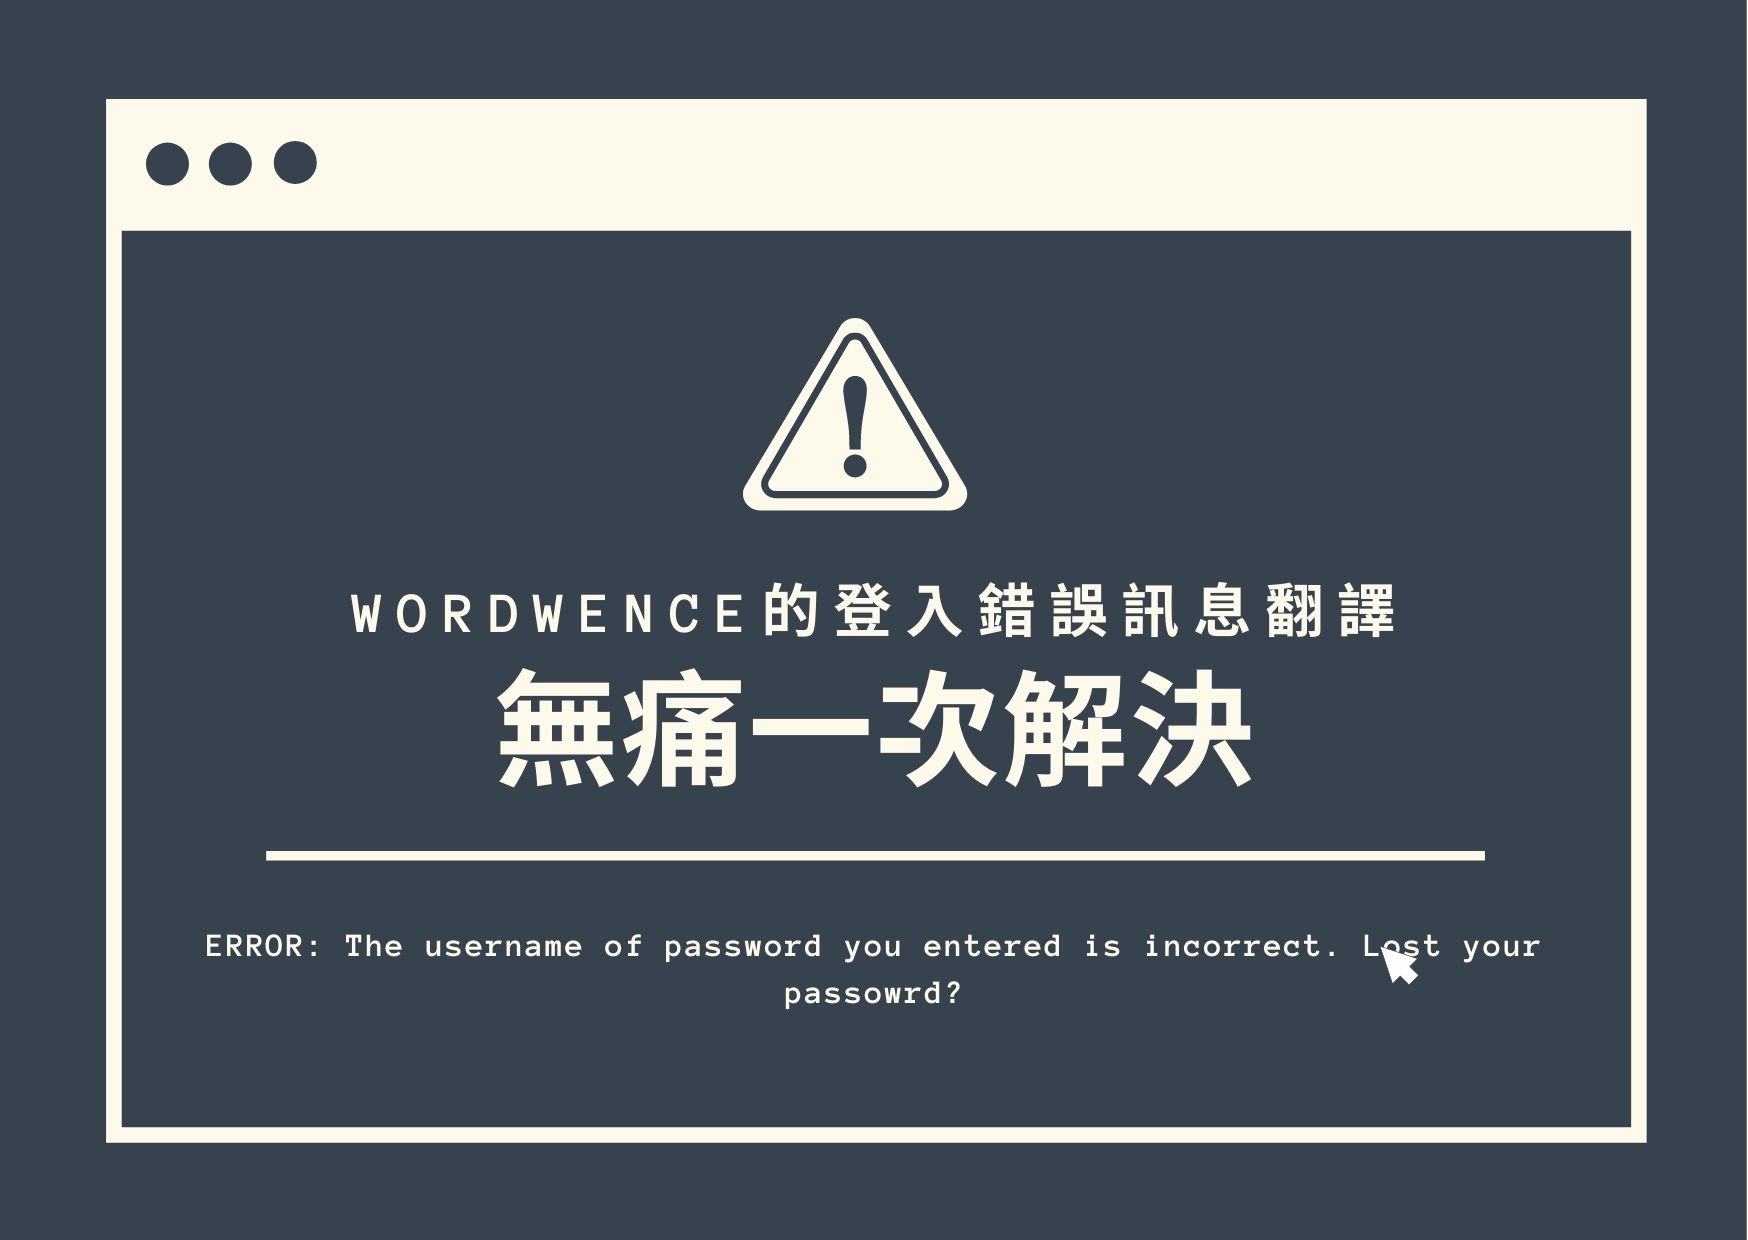 Wordfence 干擾影響登入錯誤題示訊息翻譯